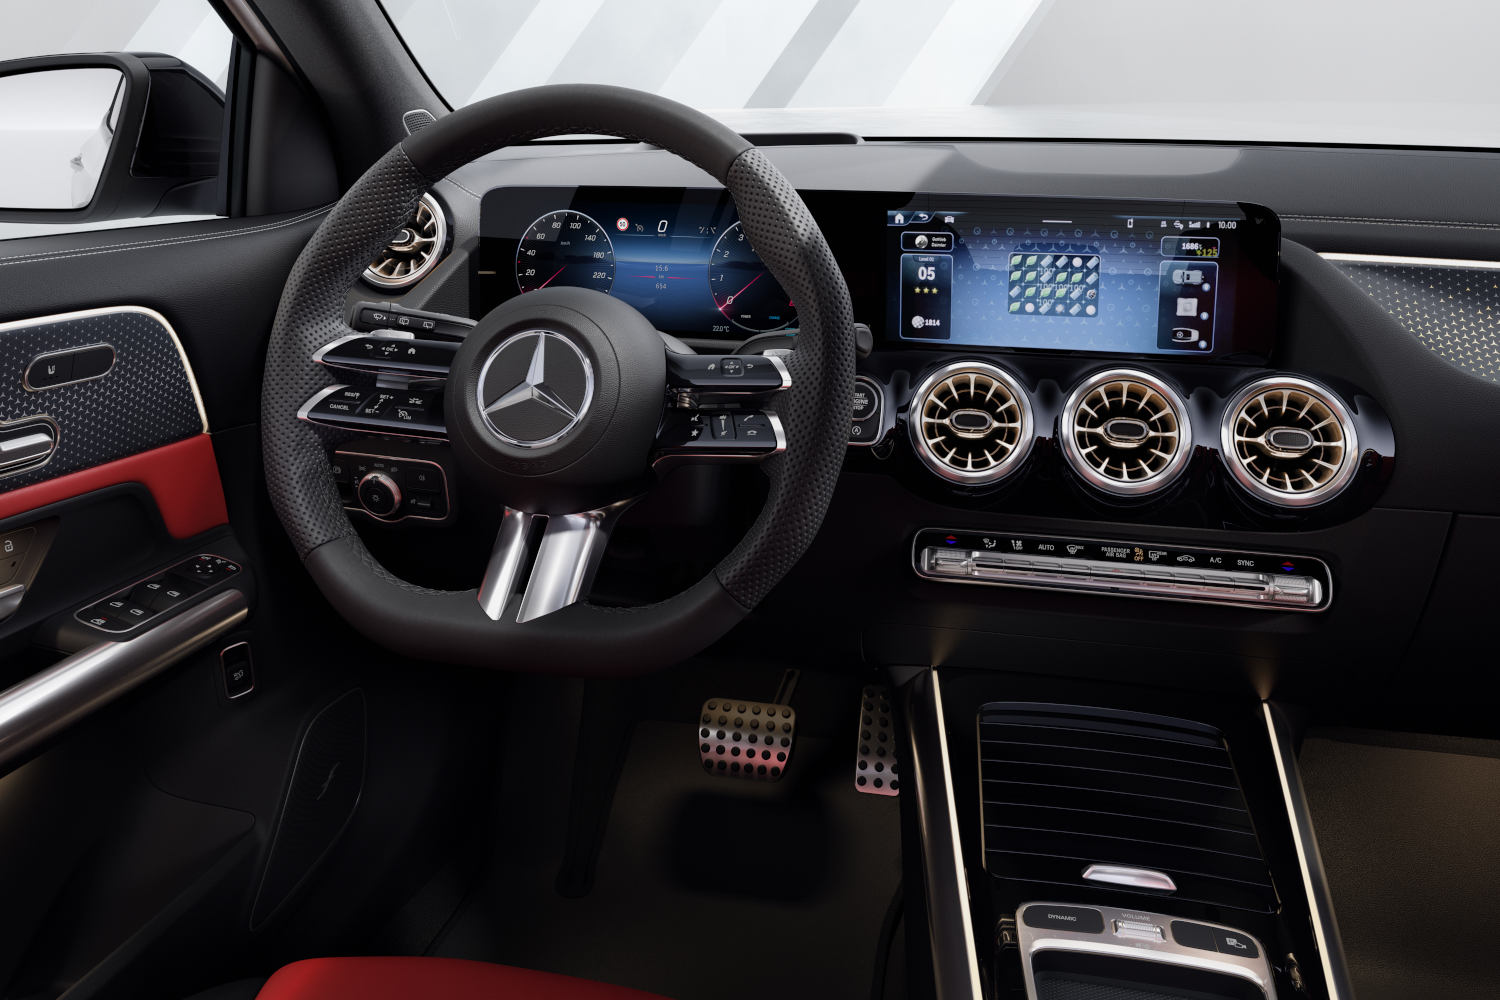 Inside the Mercedes-Benz GLA SUV